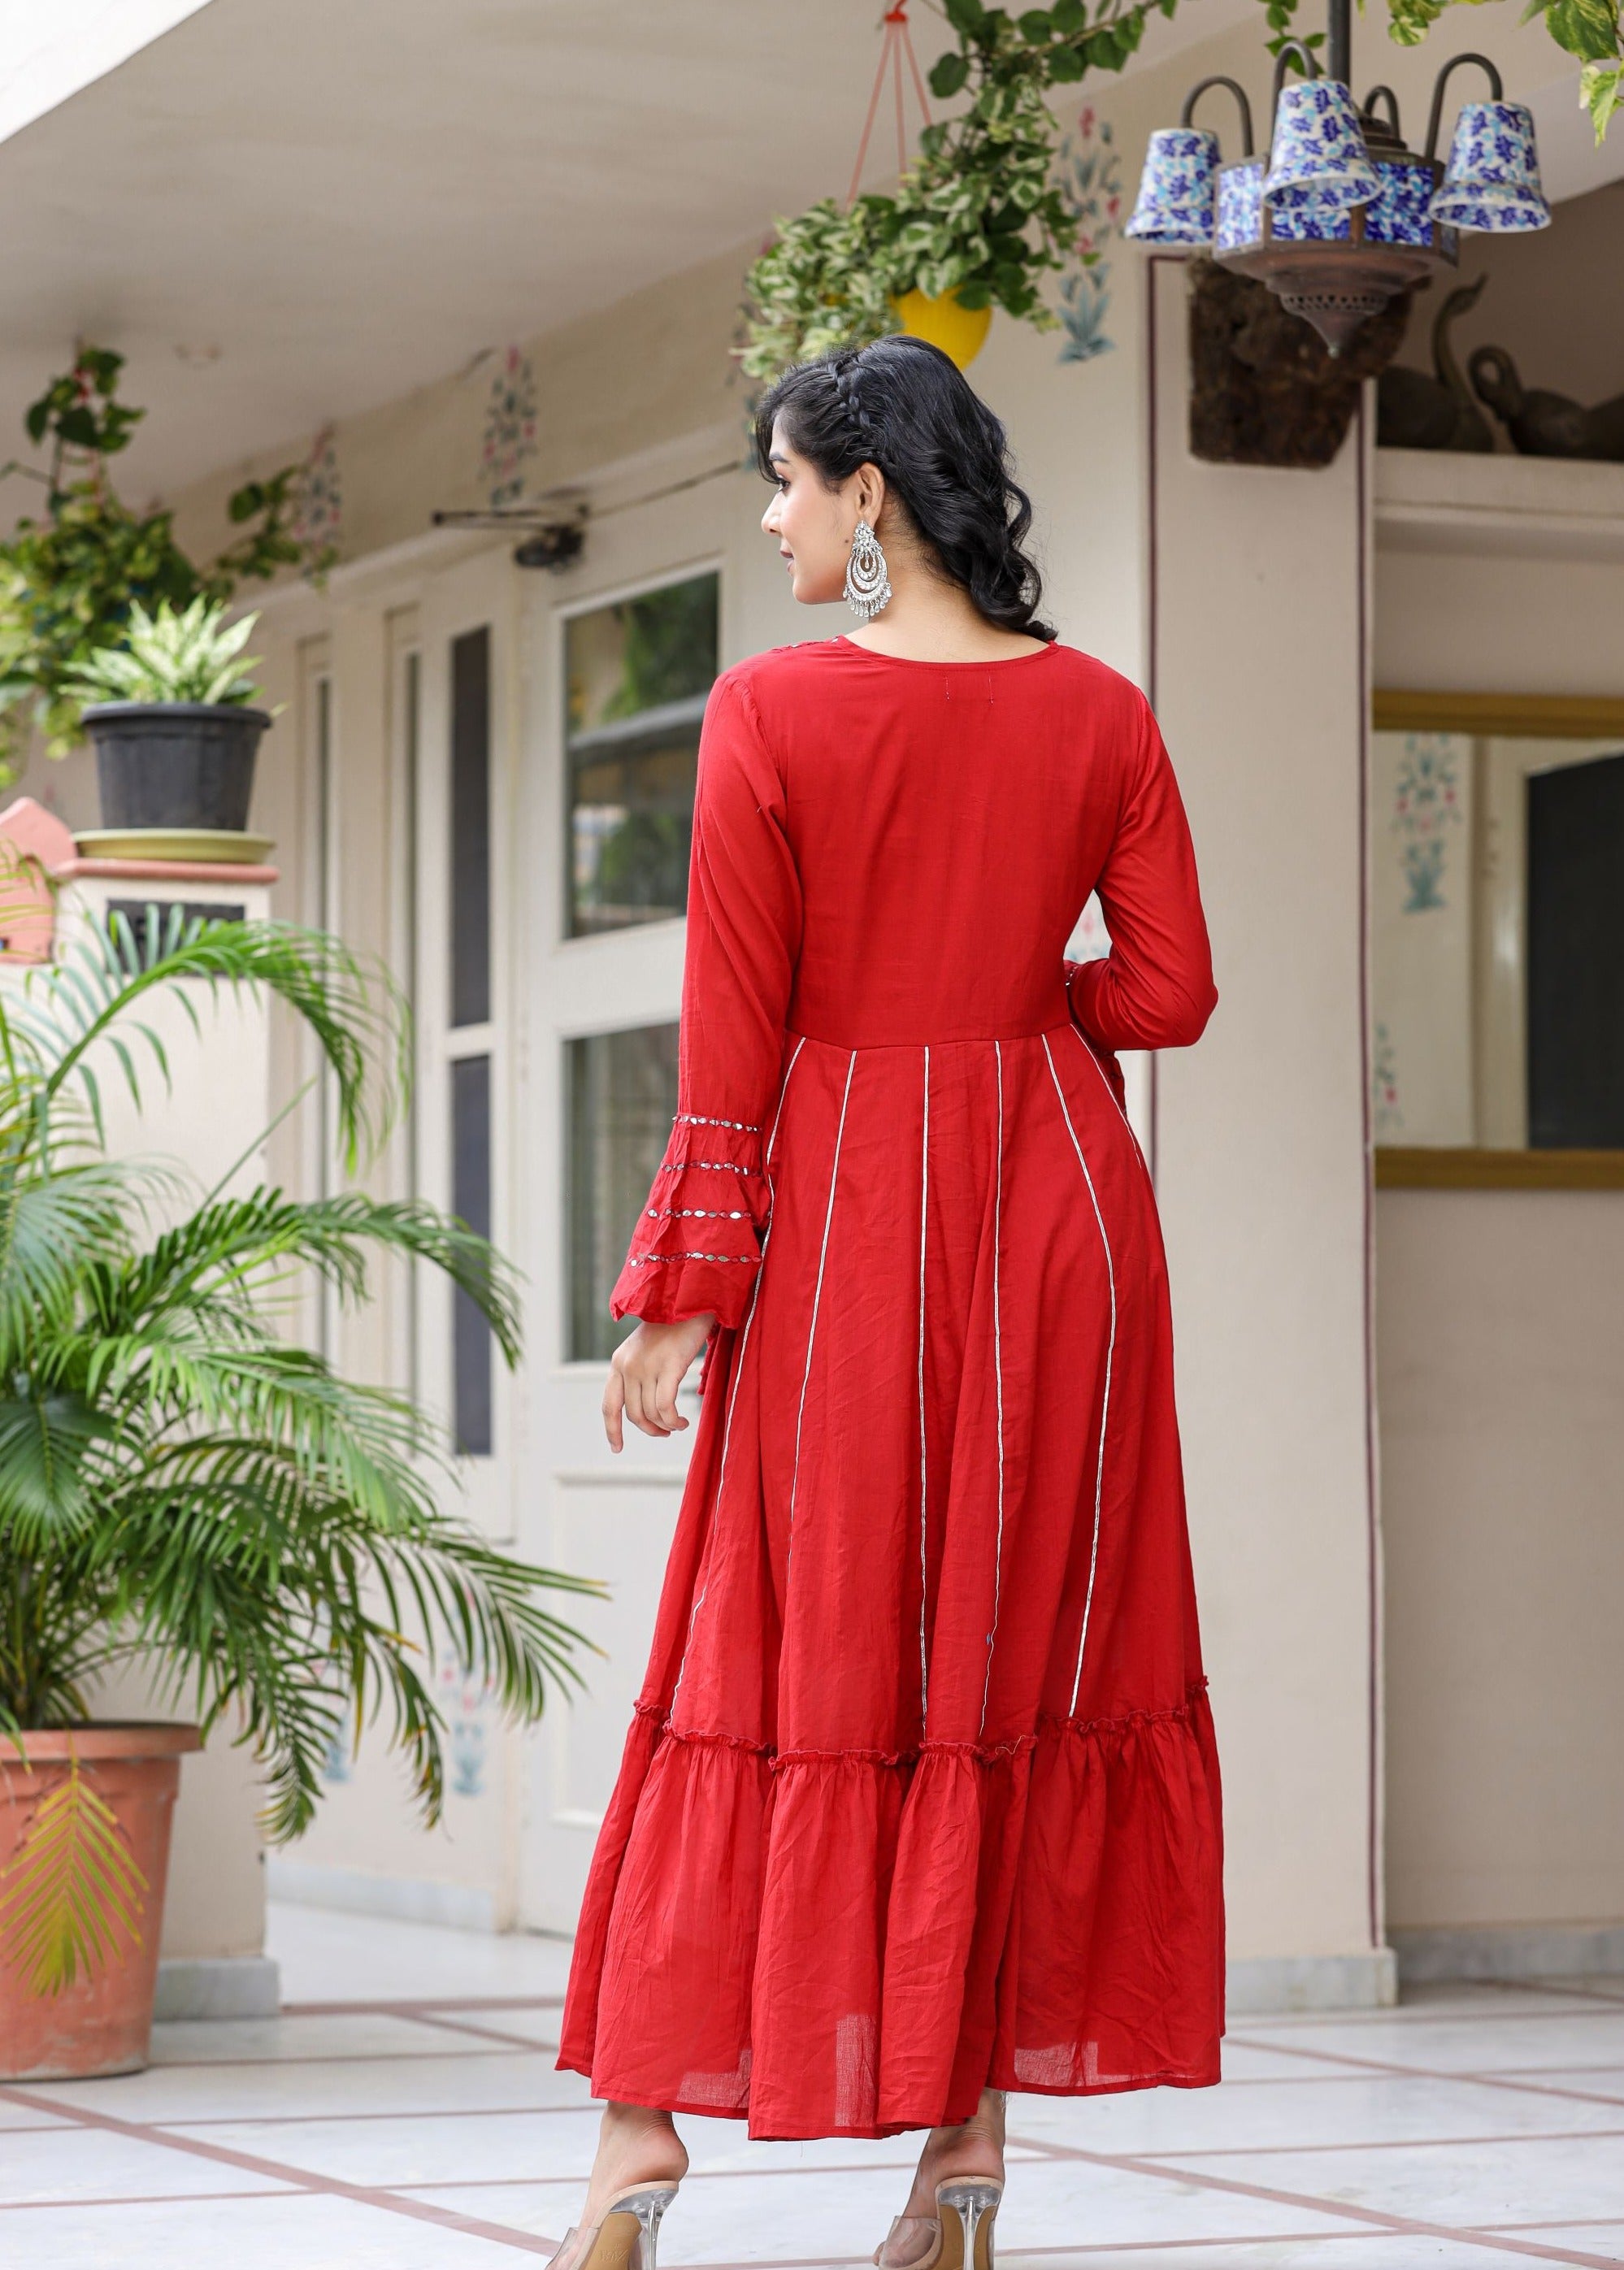 Beautiful Indian Festival Bridal Women Salwar Kameez Red Plazo Suit Ethnic  Dress | eBay